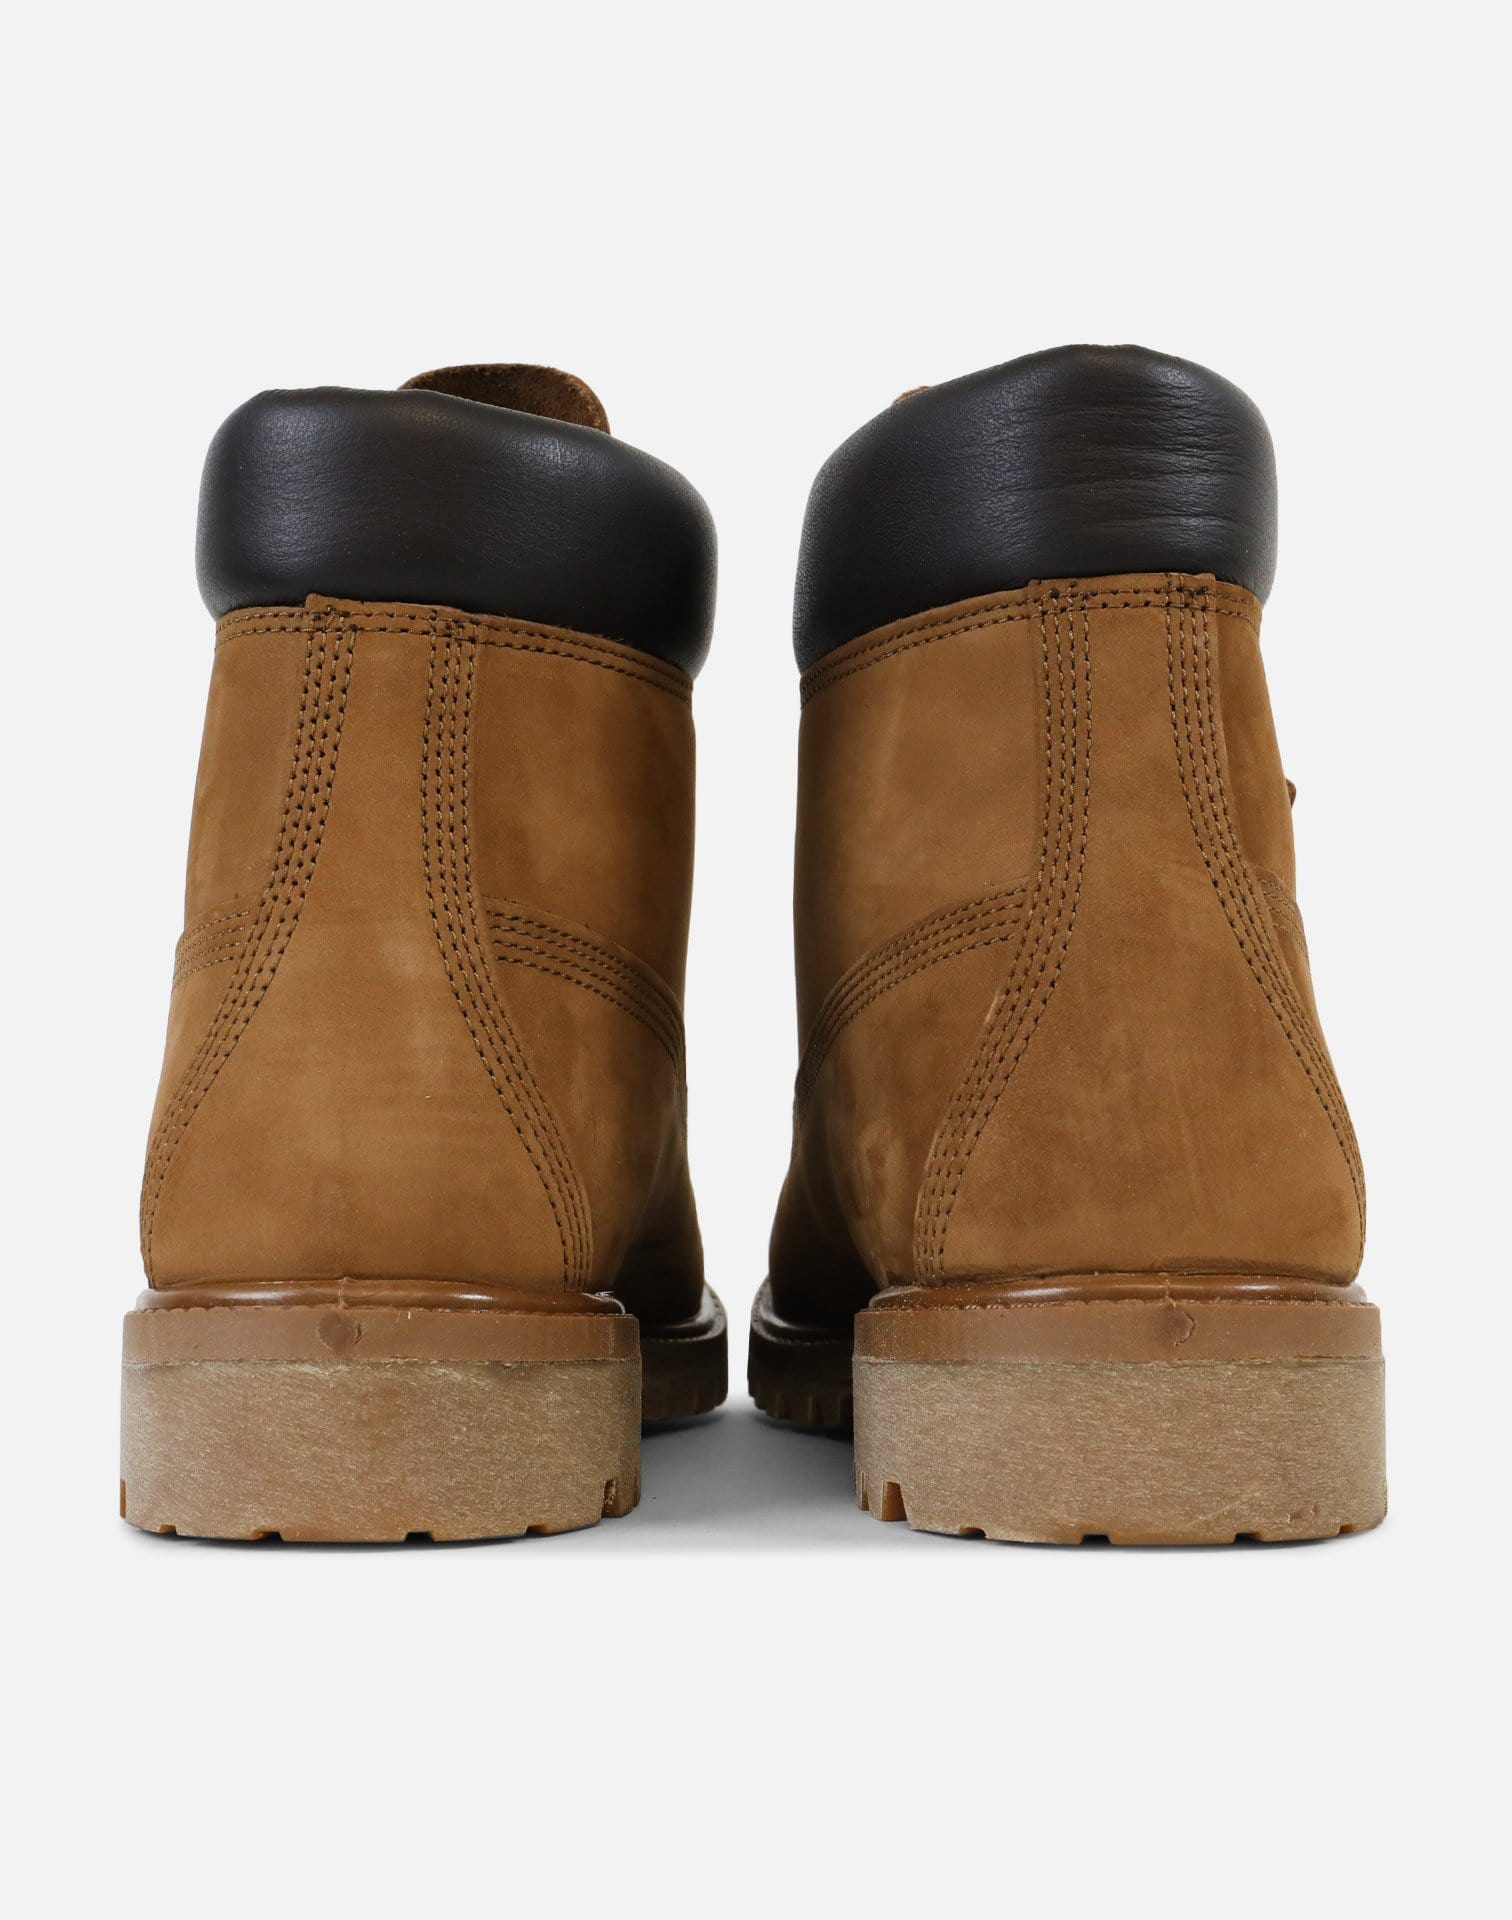 Timberland 6" Premium Boots (Tundra/Nubuck)